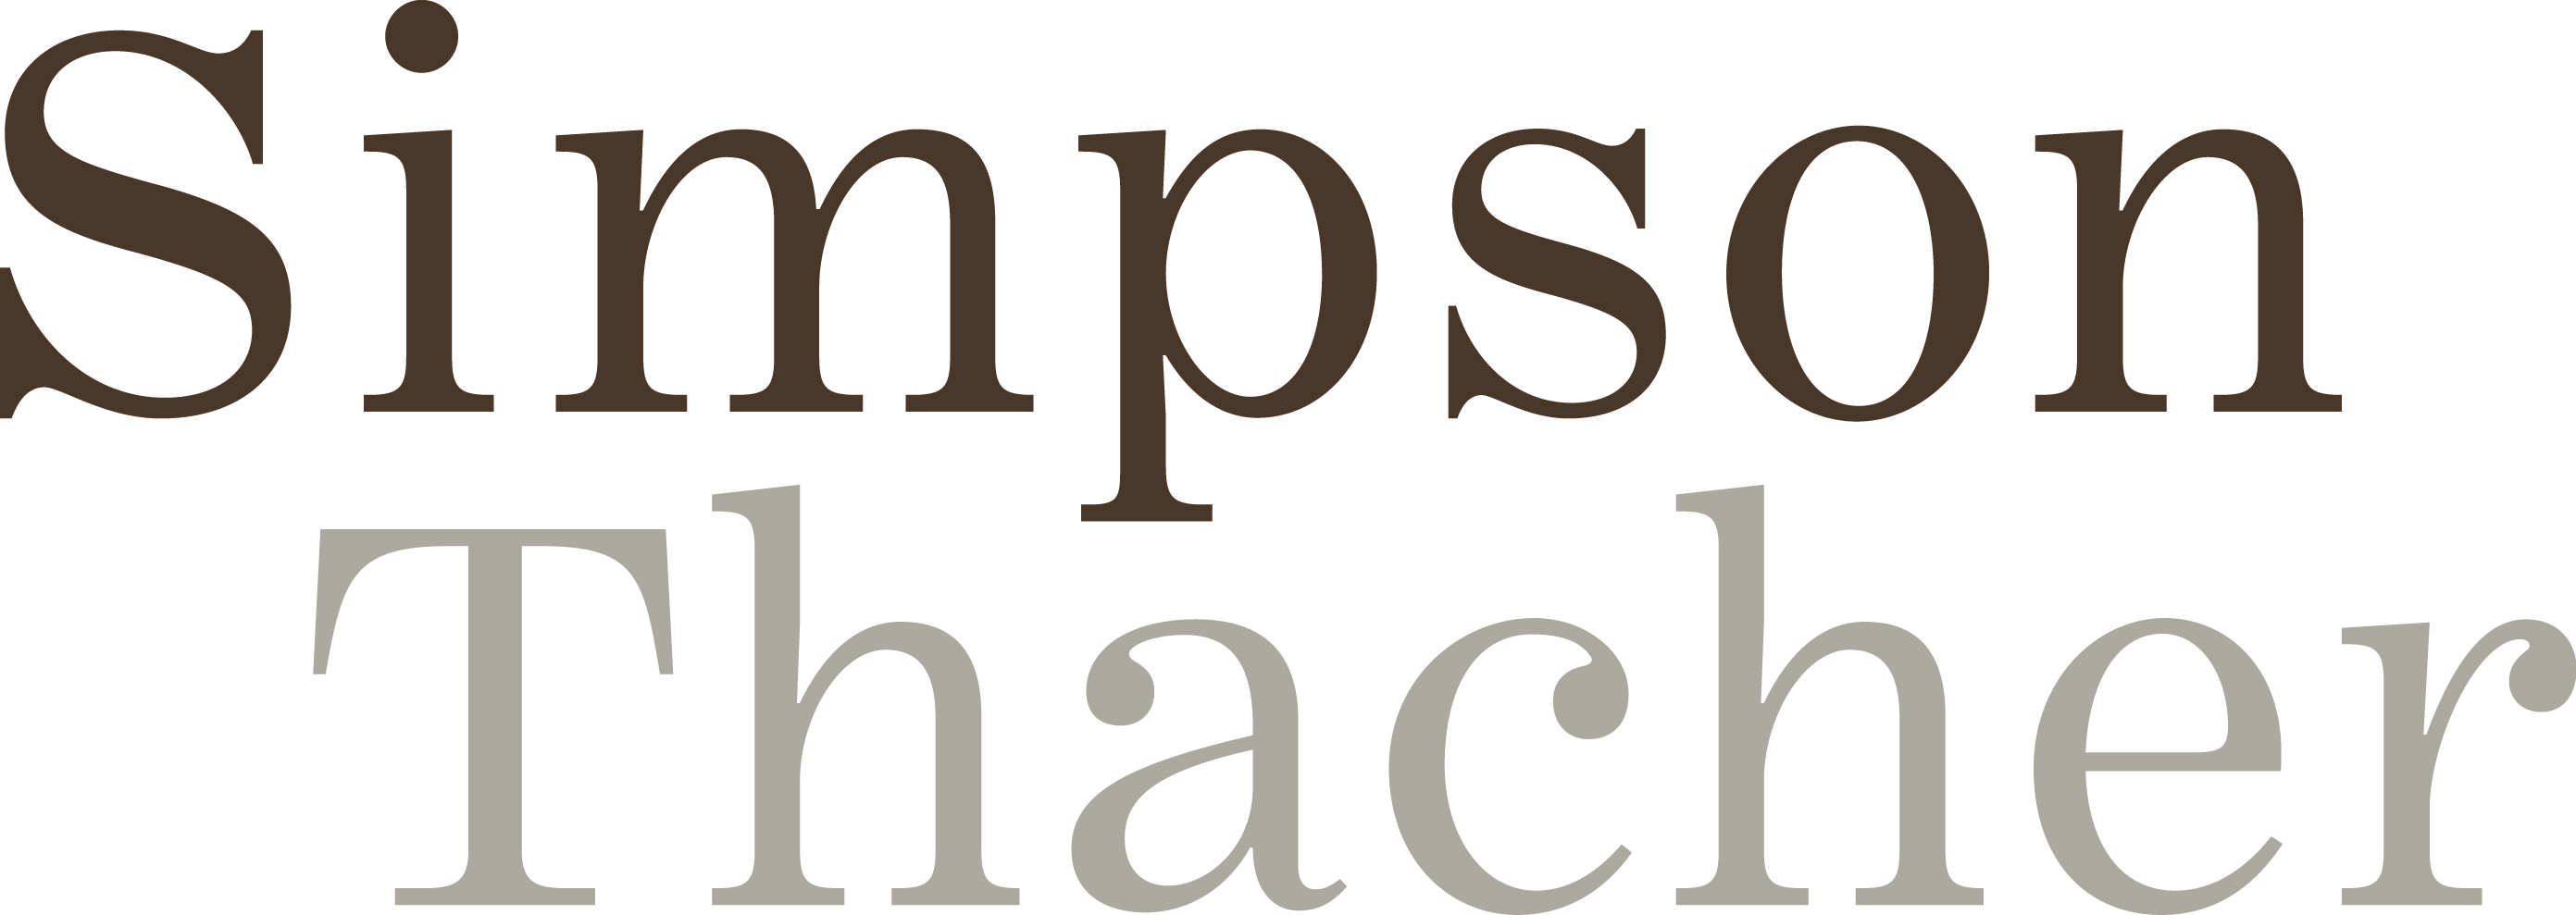 Simpson Thacher Logo - Catholic Migration Services